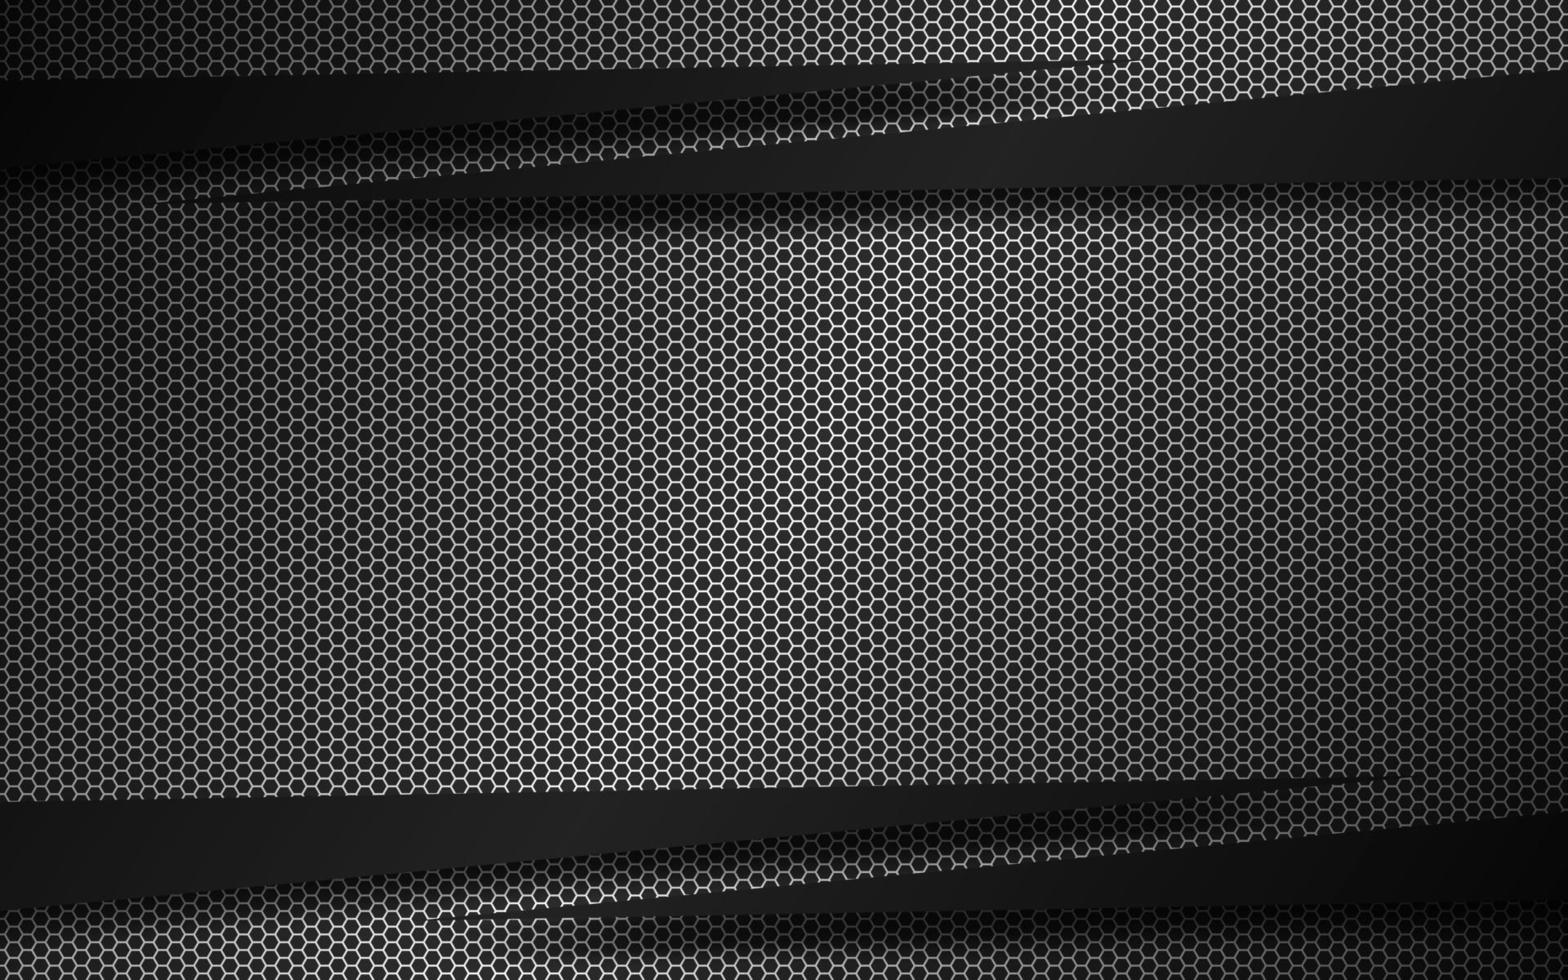 fundo de material preto e cinza com setas escuras e malha hexagonal de metal. modelo moderno para o seu negócio e projetos. fundo widescreen abstrato vetor